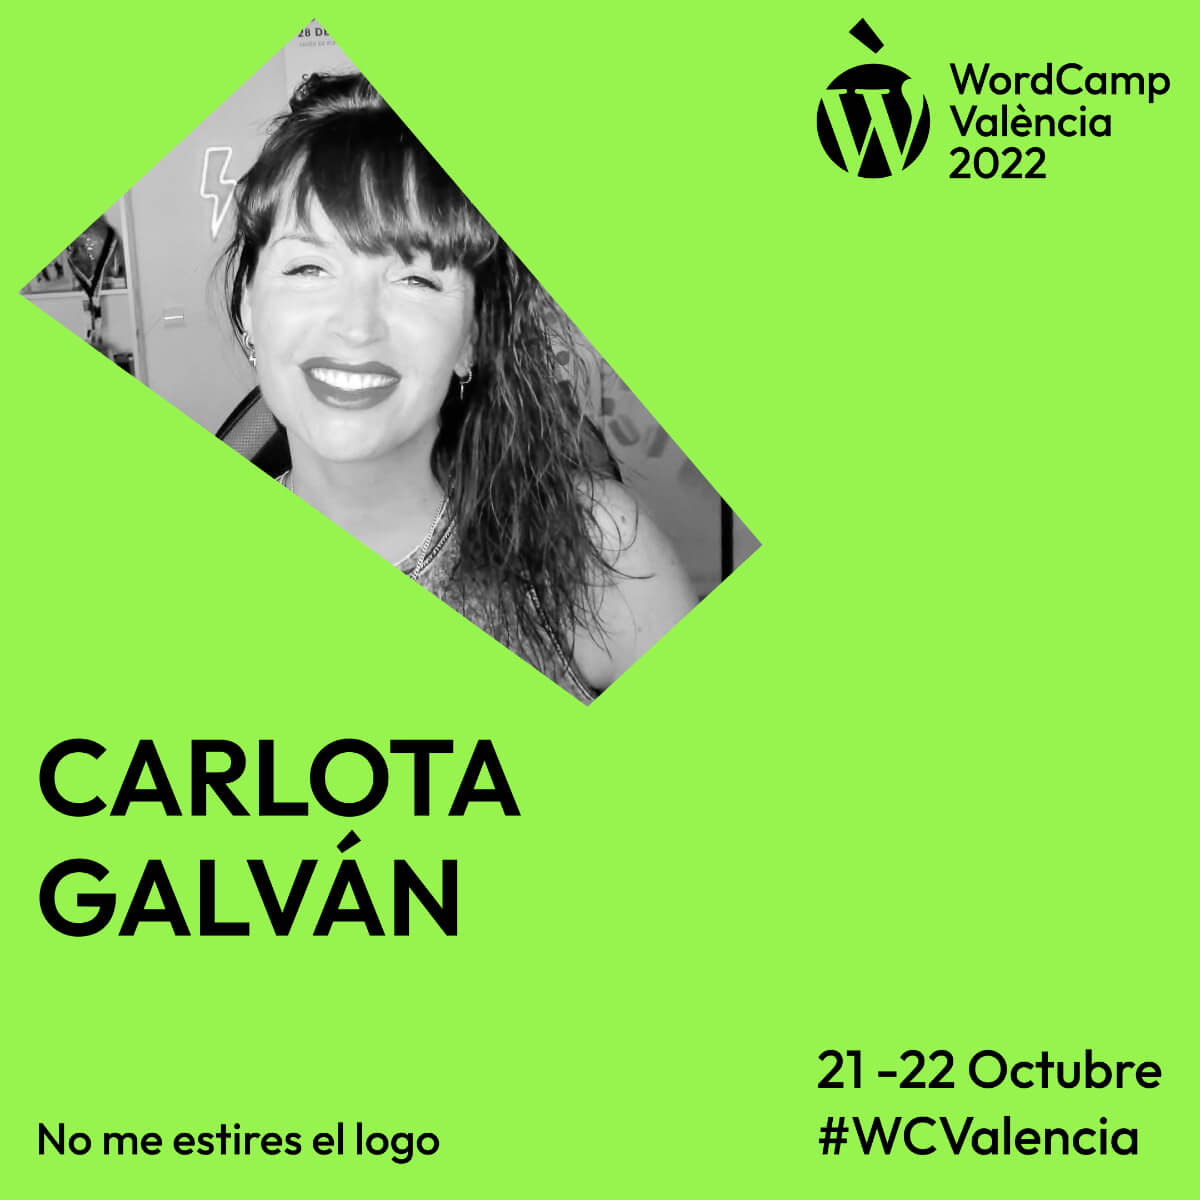 Carlota Galván WCVLC 2022